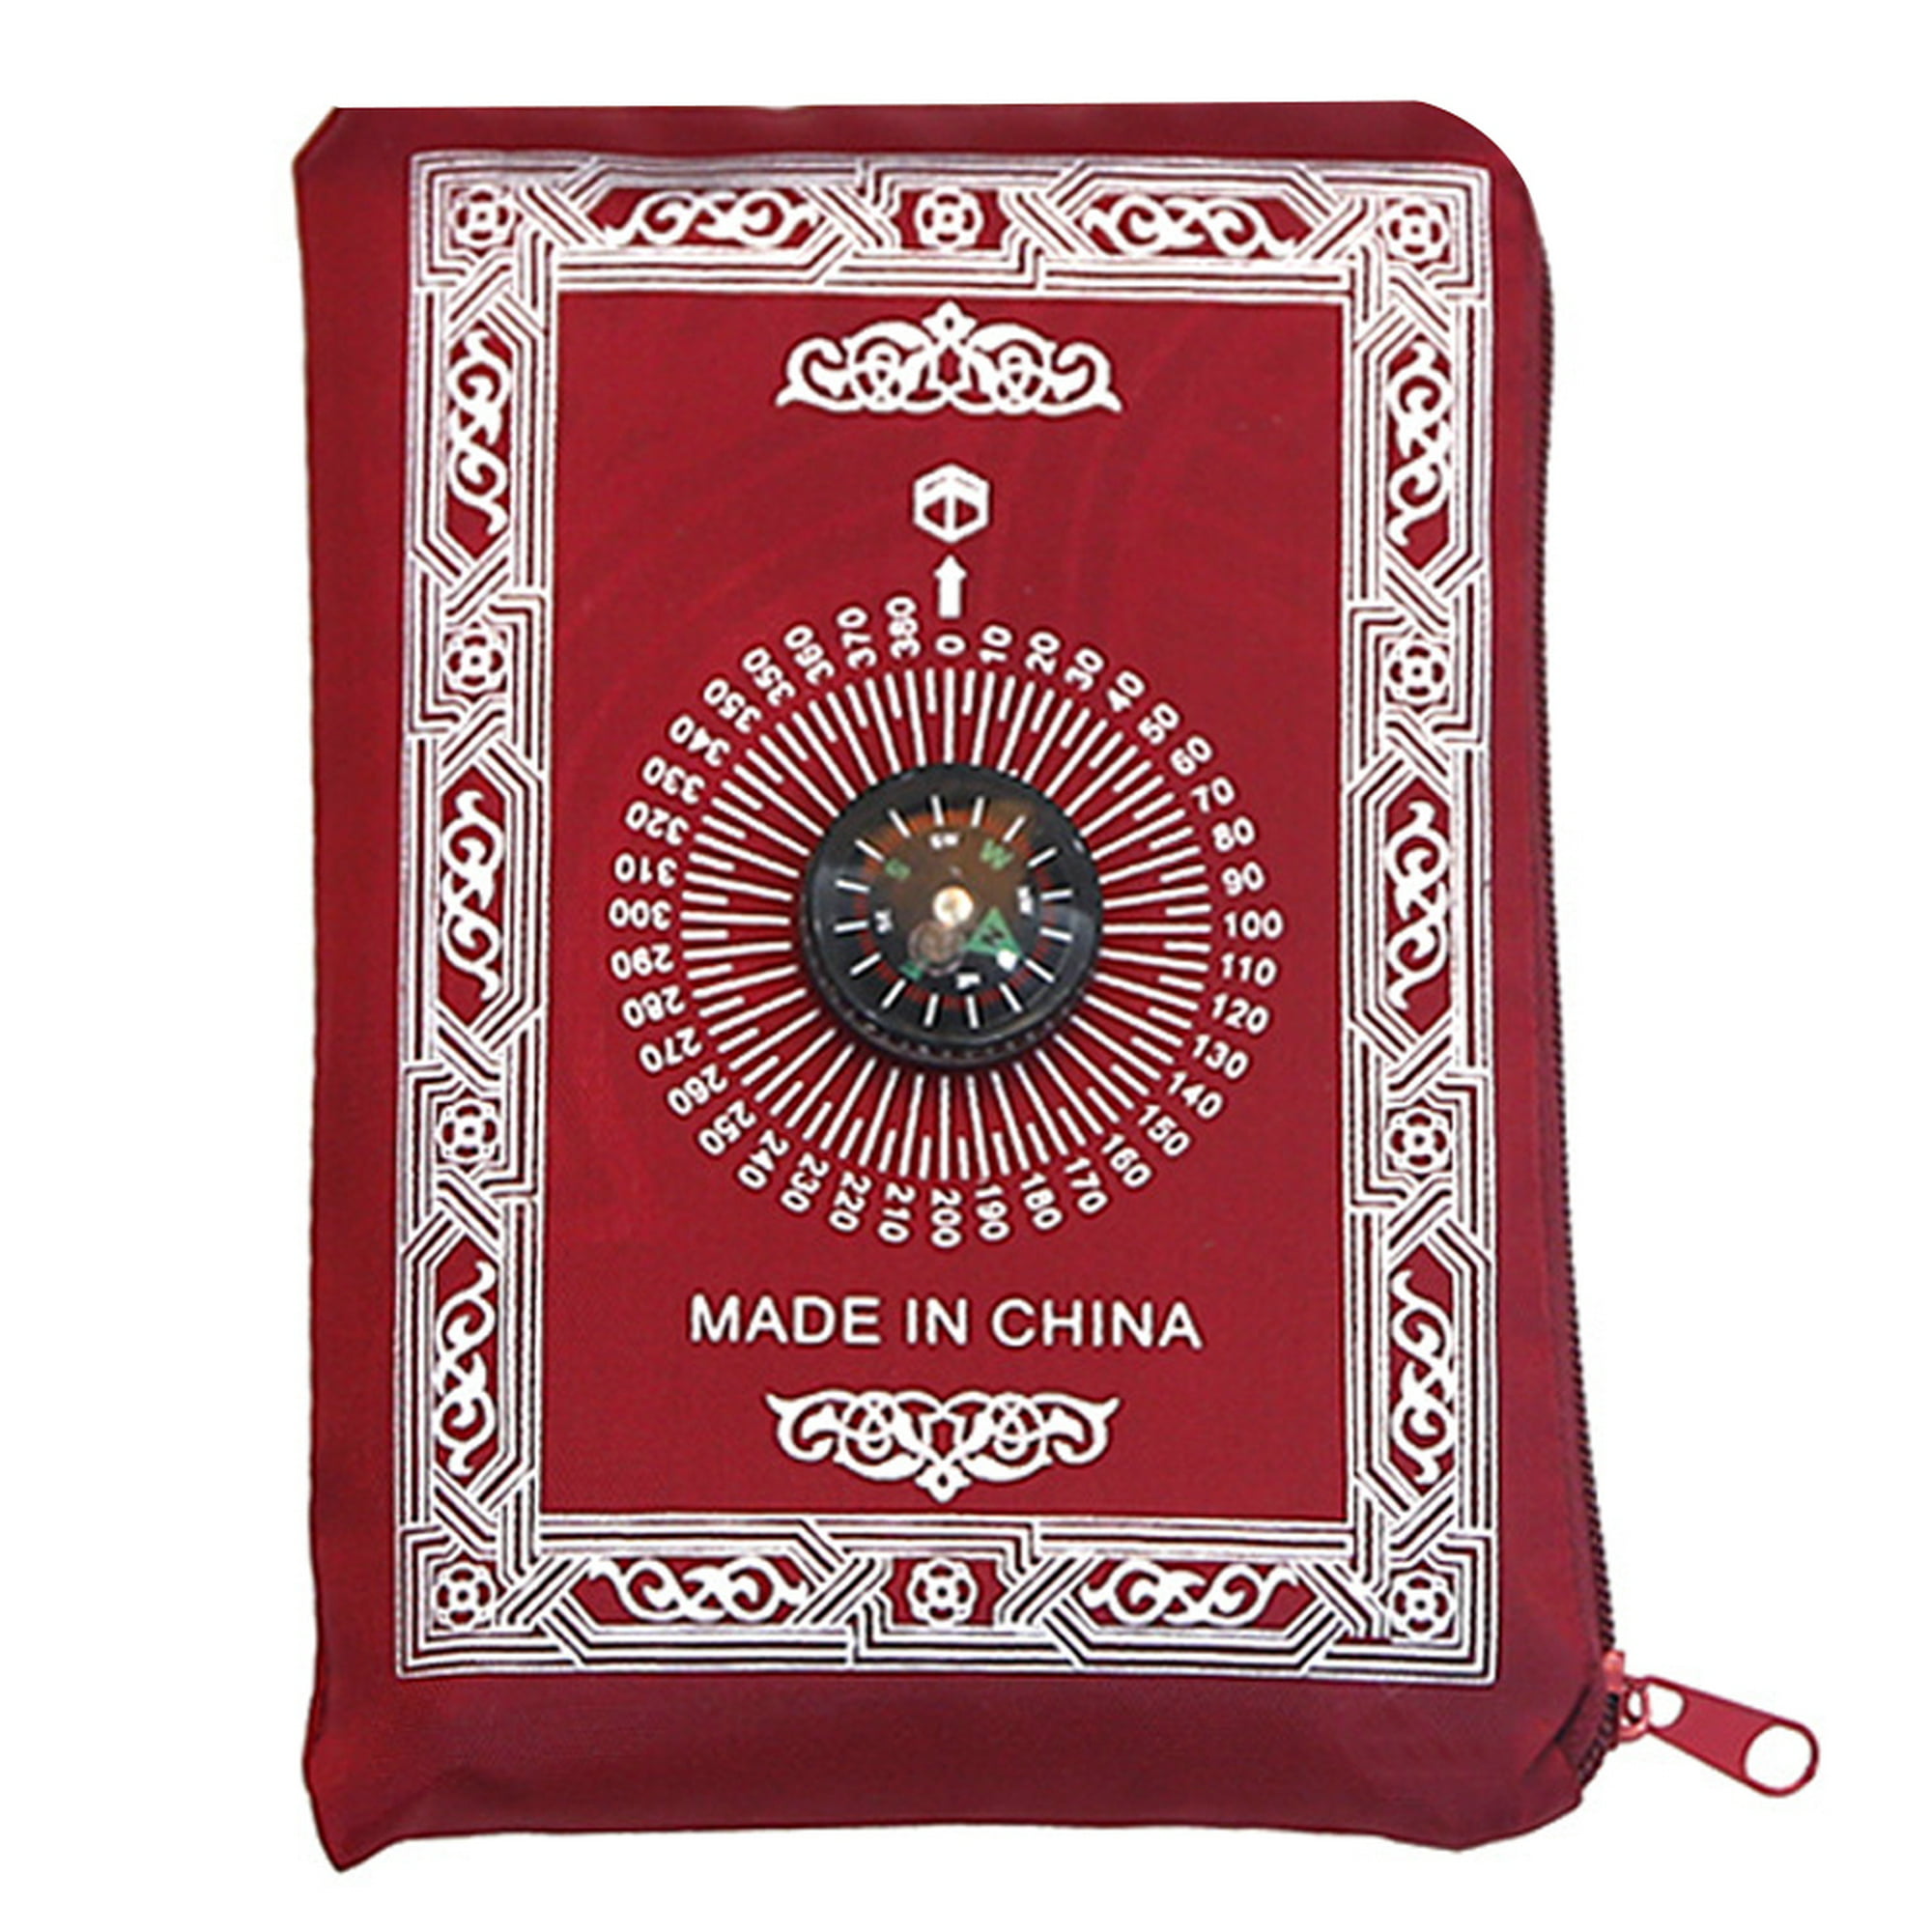 Details about   Portable Muslim Travel Islamic Worship Prayer Rugs Carpet Blanket Compass Mat US 